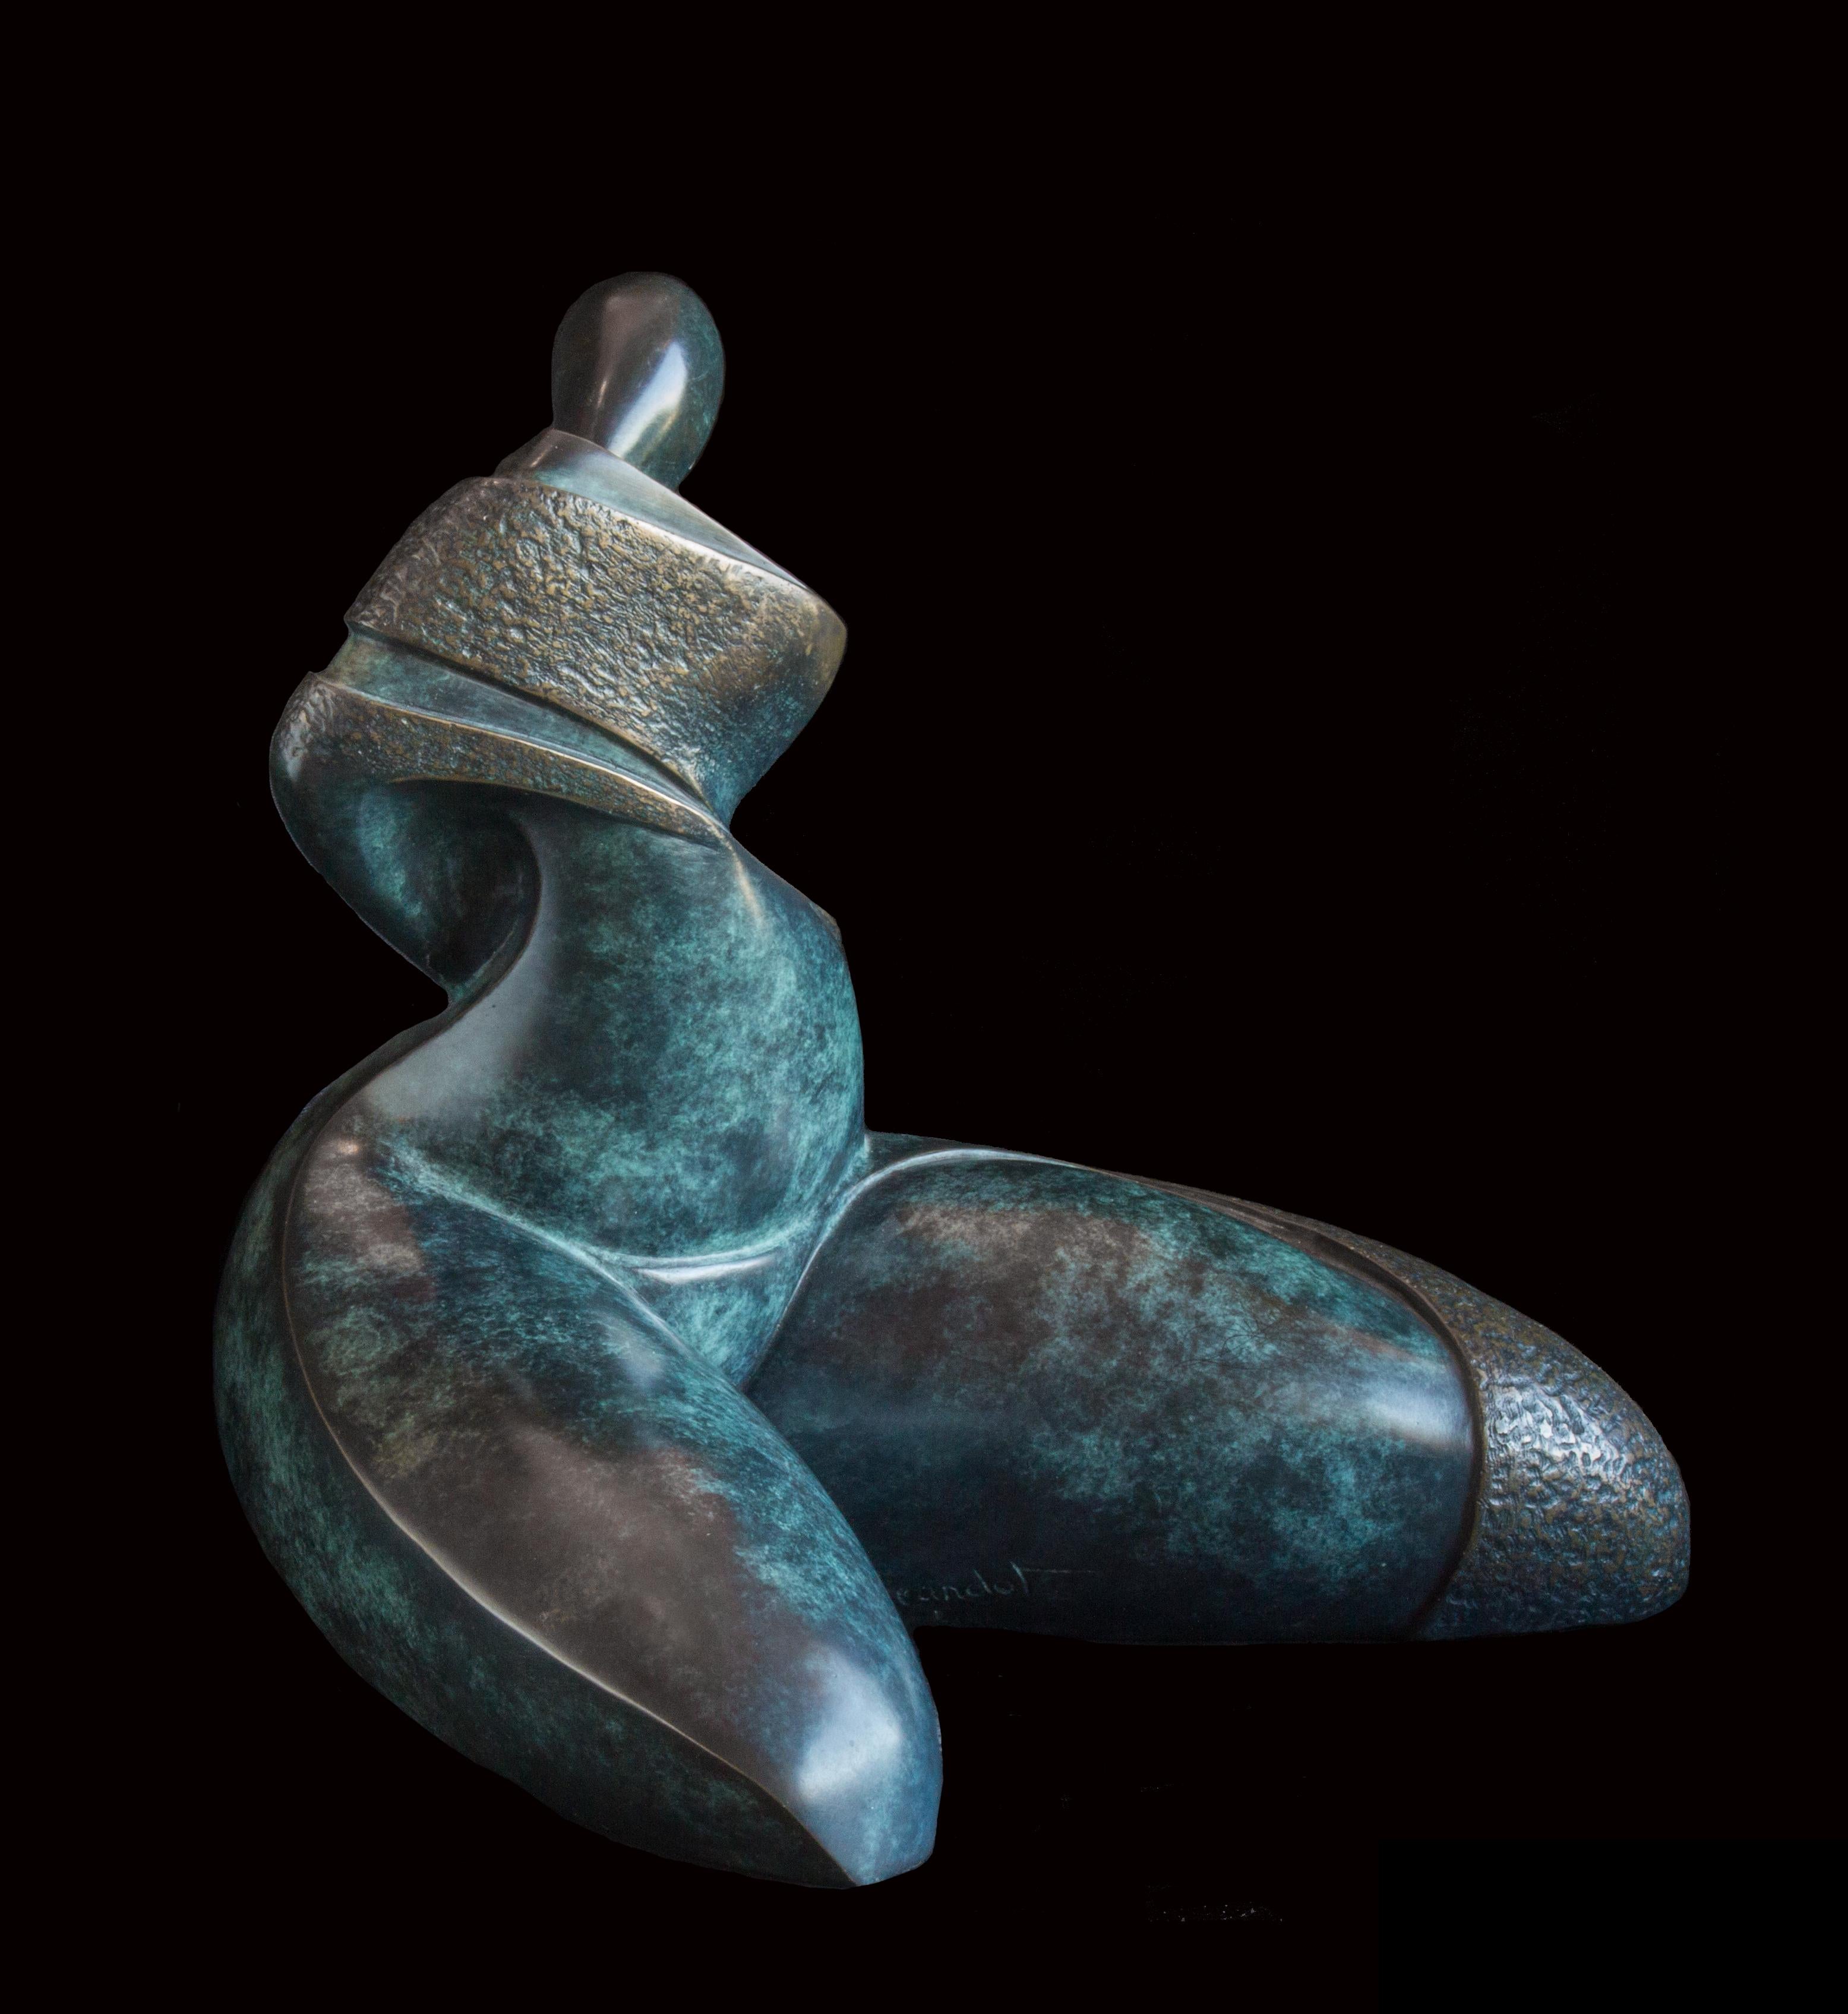 Isabelle Jeandot Nude Sculpture - "Effeuillamante", Kneeled Venus Looking Behind Semi-Abstract Bronze Sculpture